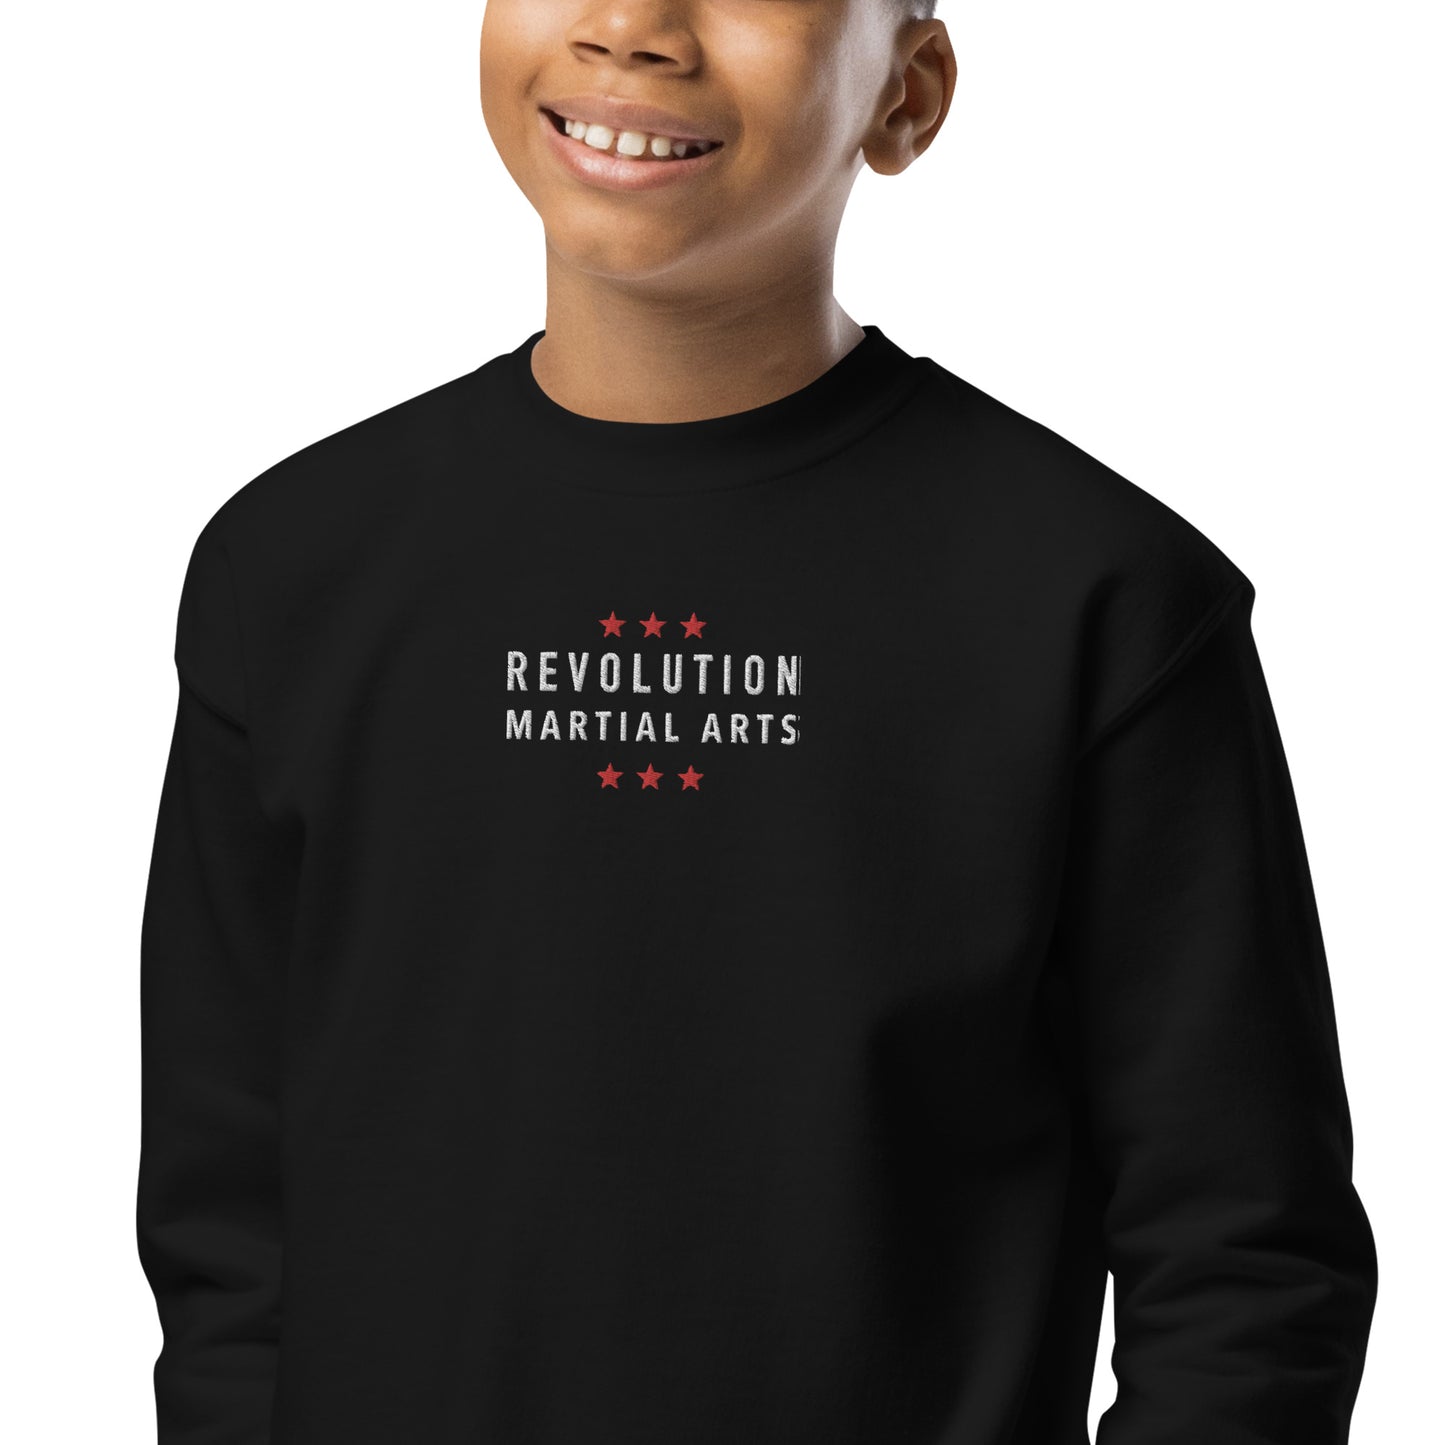 Revs Youth crewneck sweatshirt